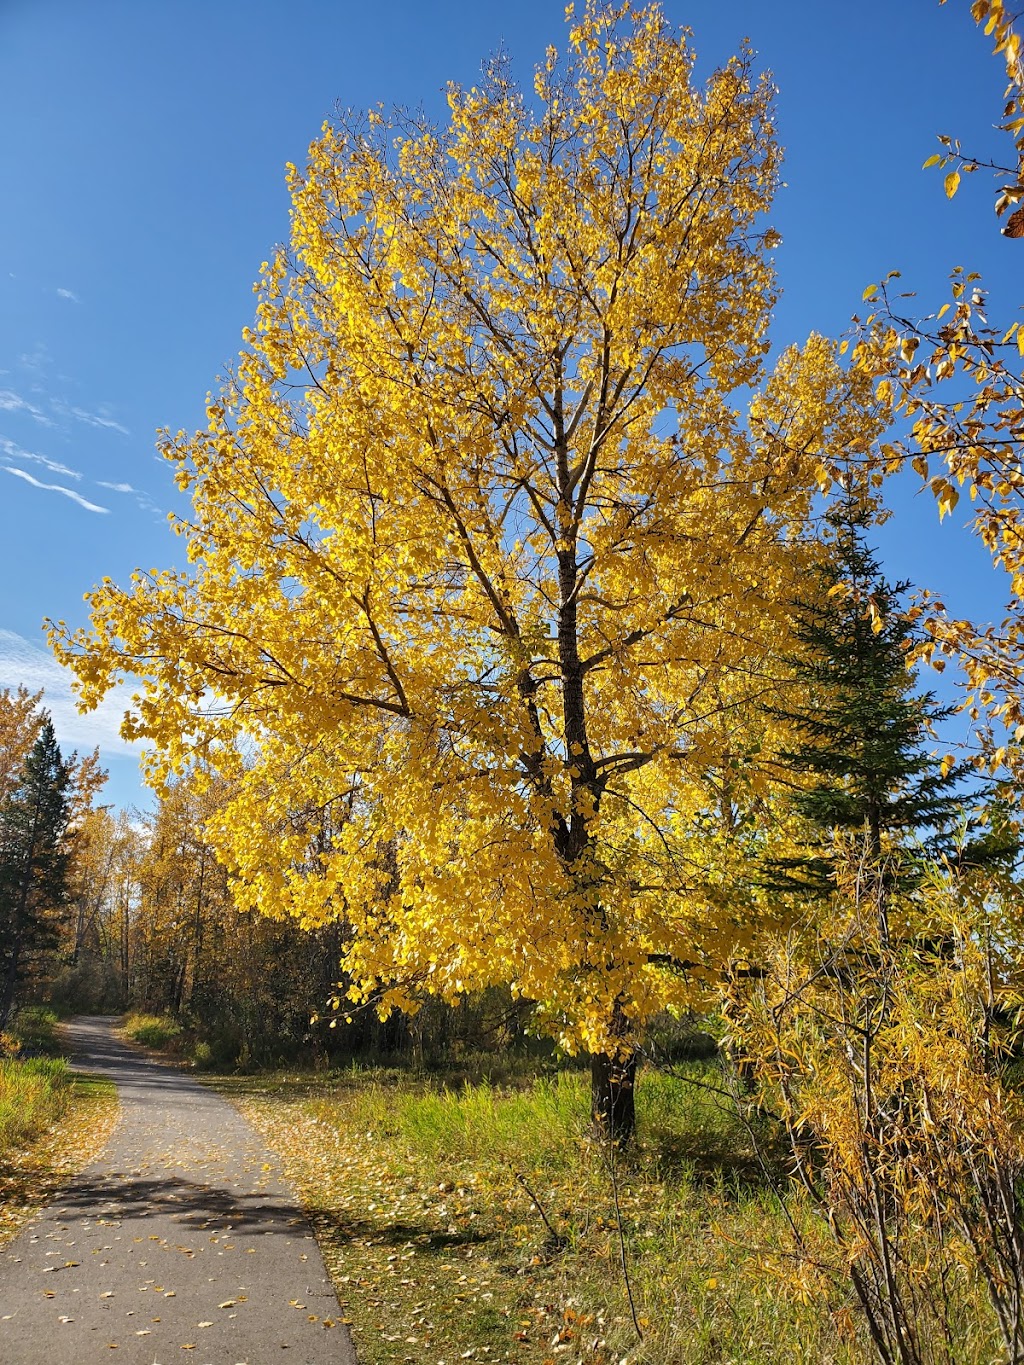 McKenzie Trails Park. | Red Deer, AB T4N 3M4, Canada | Phone: (403) 443-8721